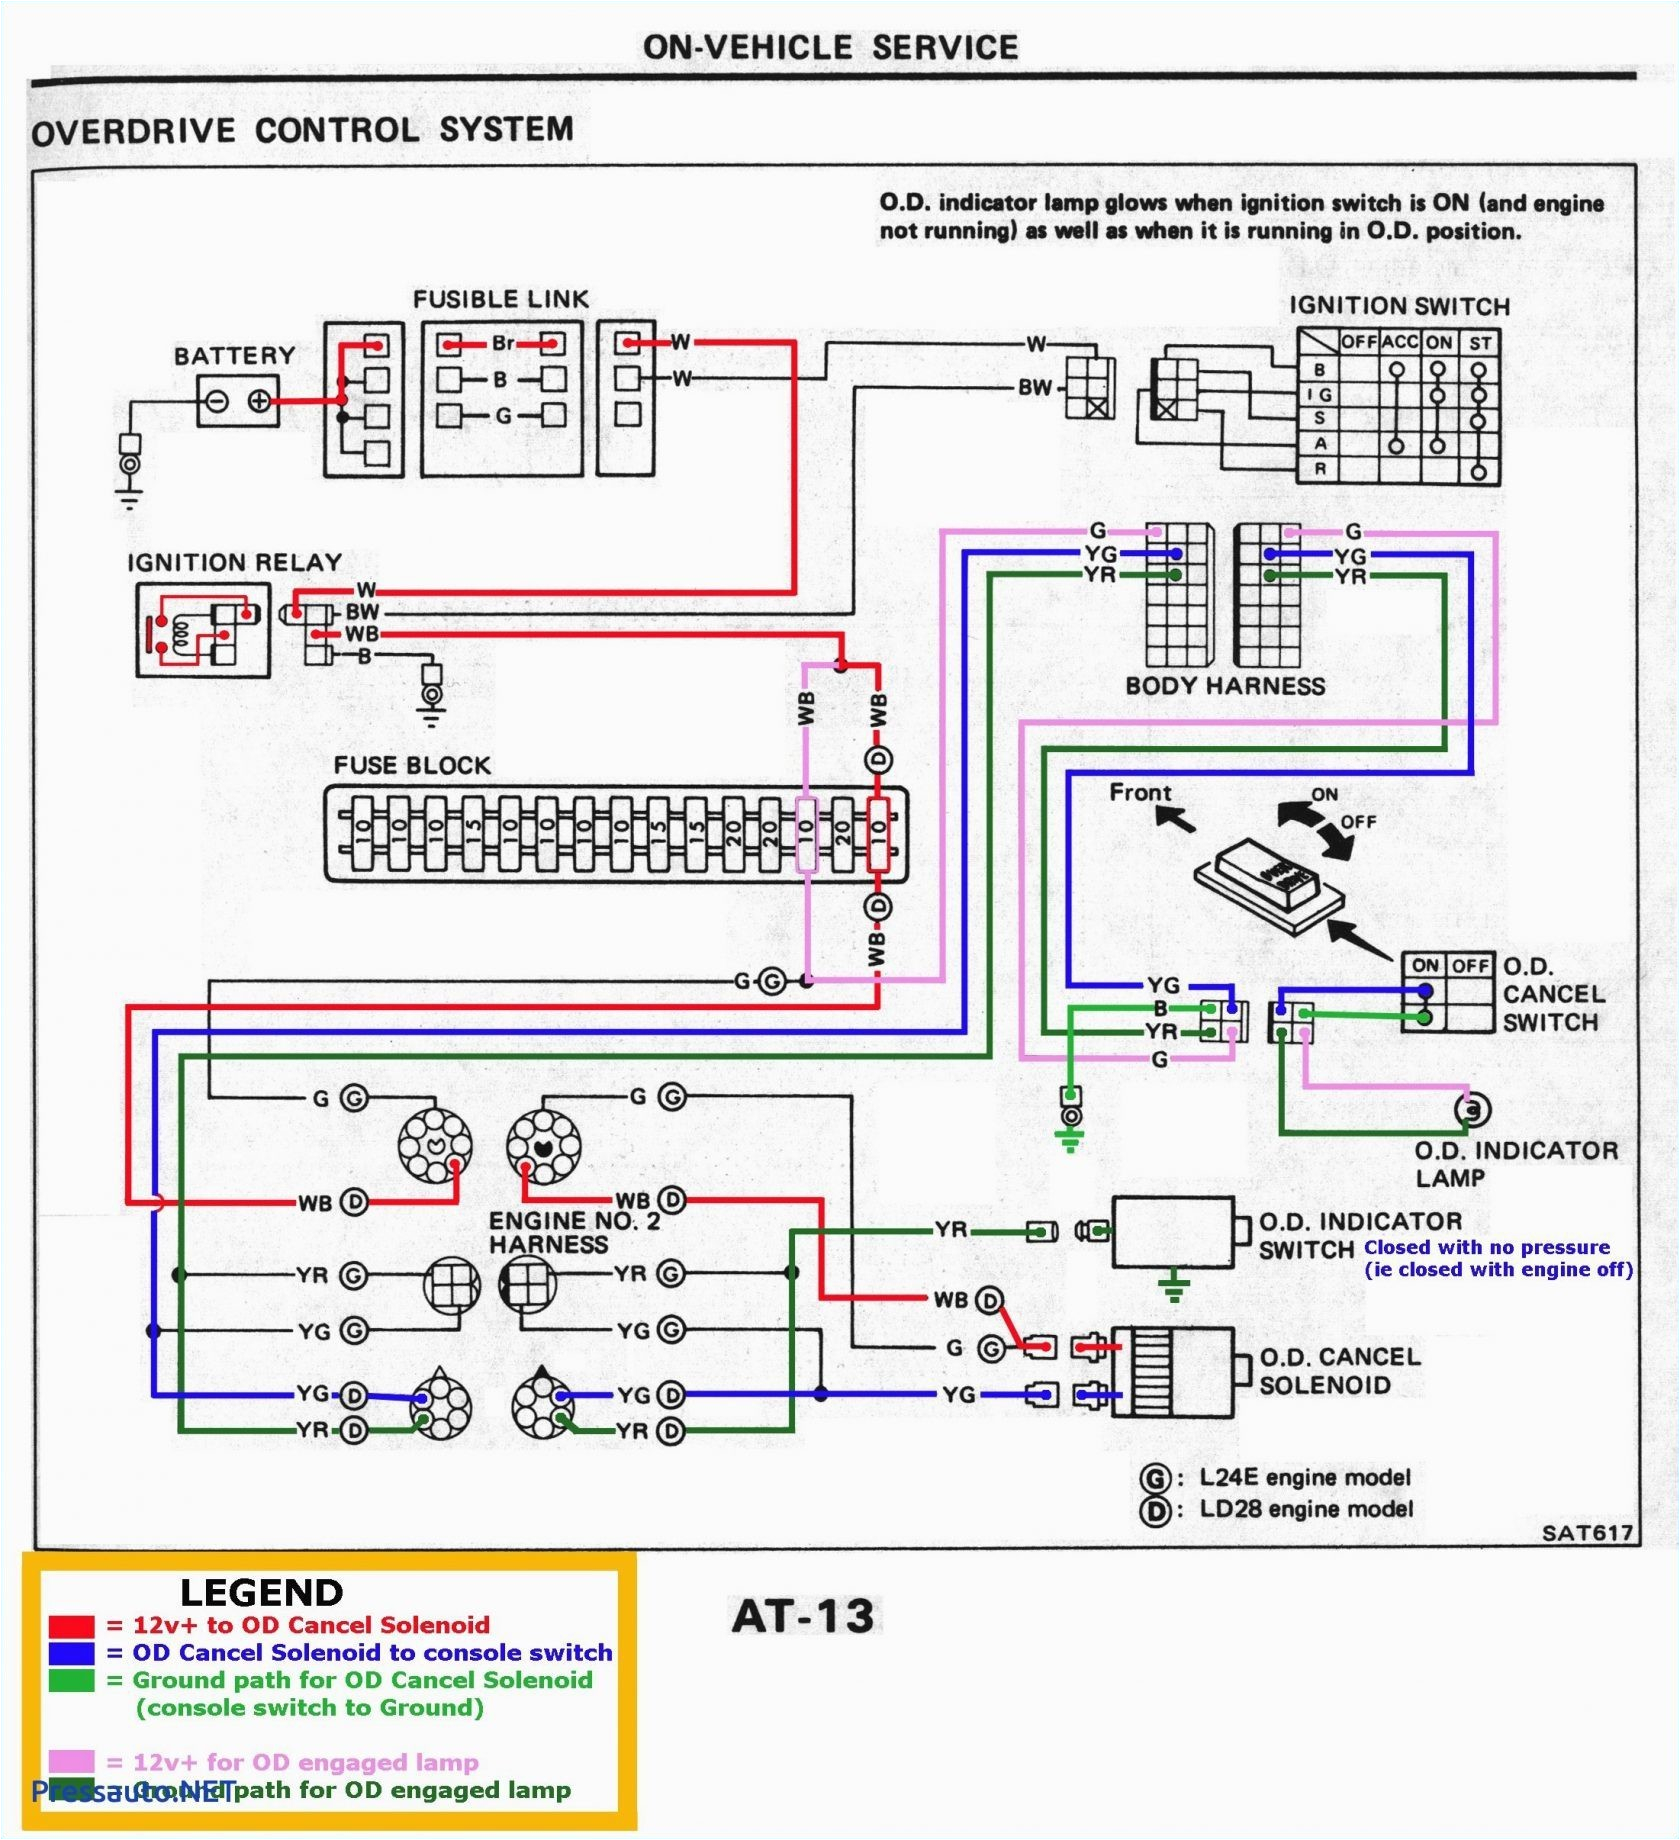 2001 Corvette Wiring Diagram toyota ist Wiring Diagram Wiring Diagram Show